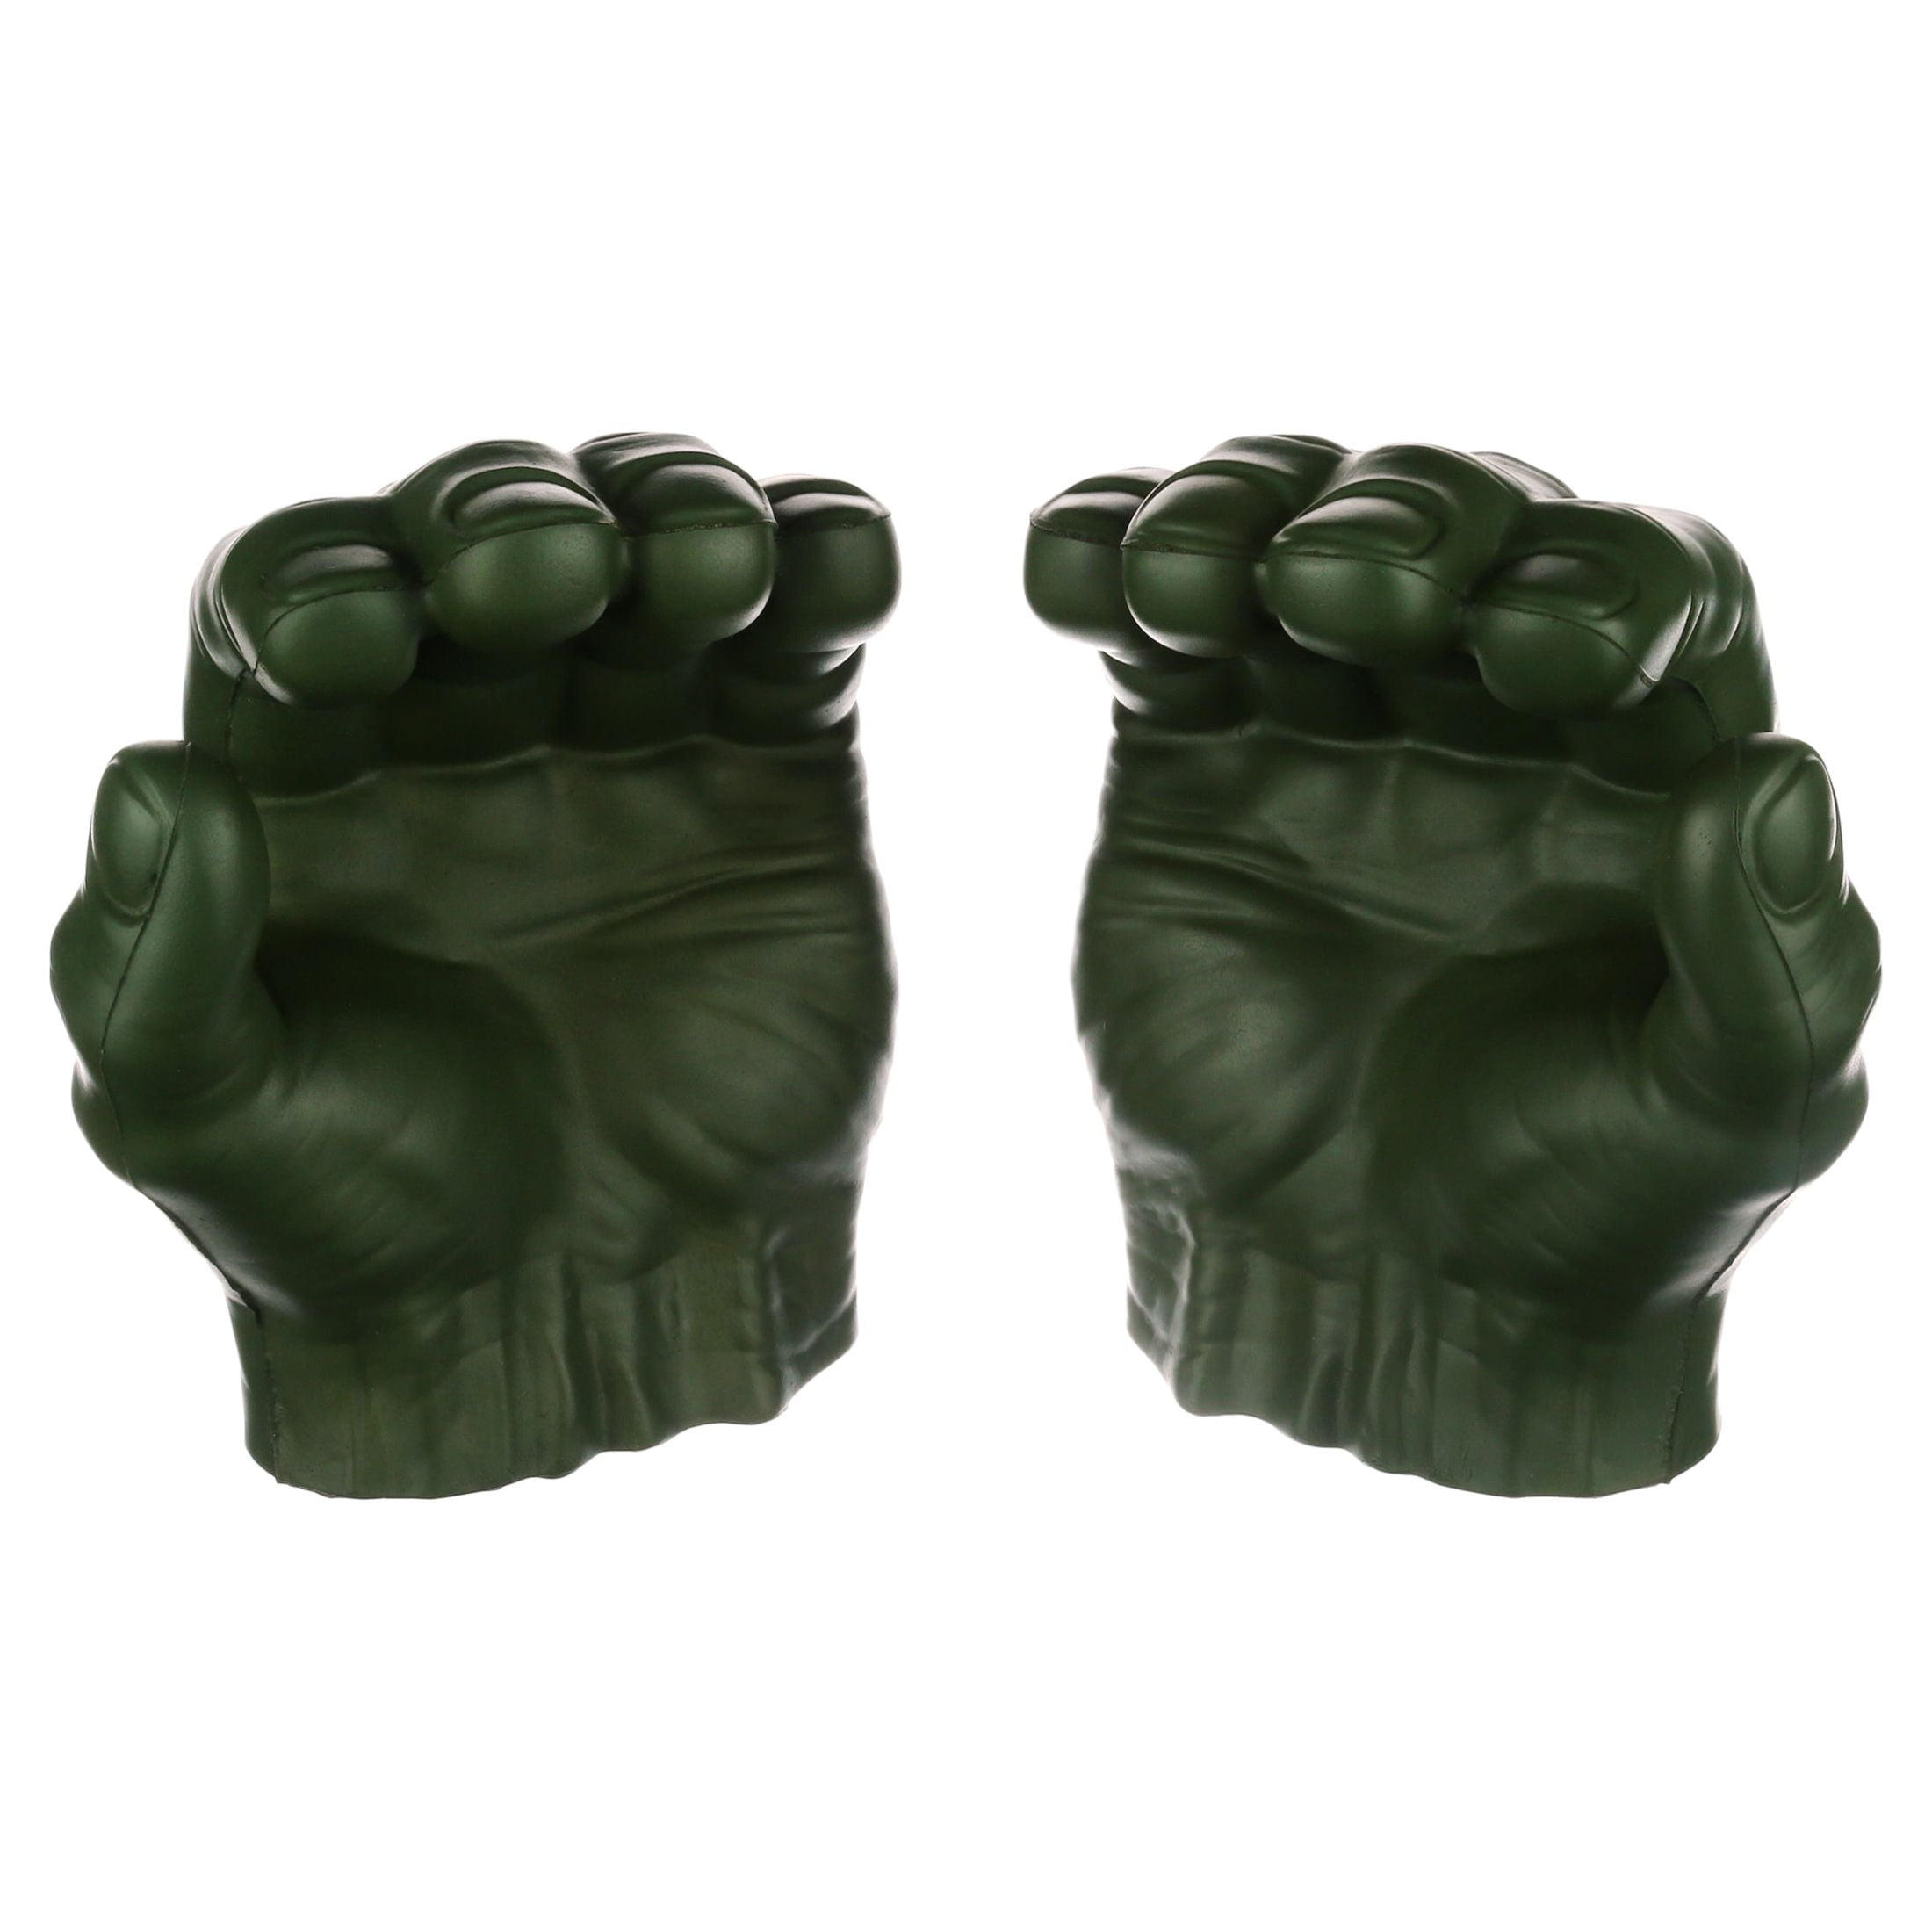 Marvel Avengers Gamma Grip Hulk Fists E0615 for sale online